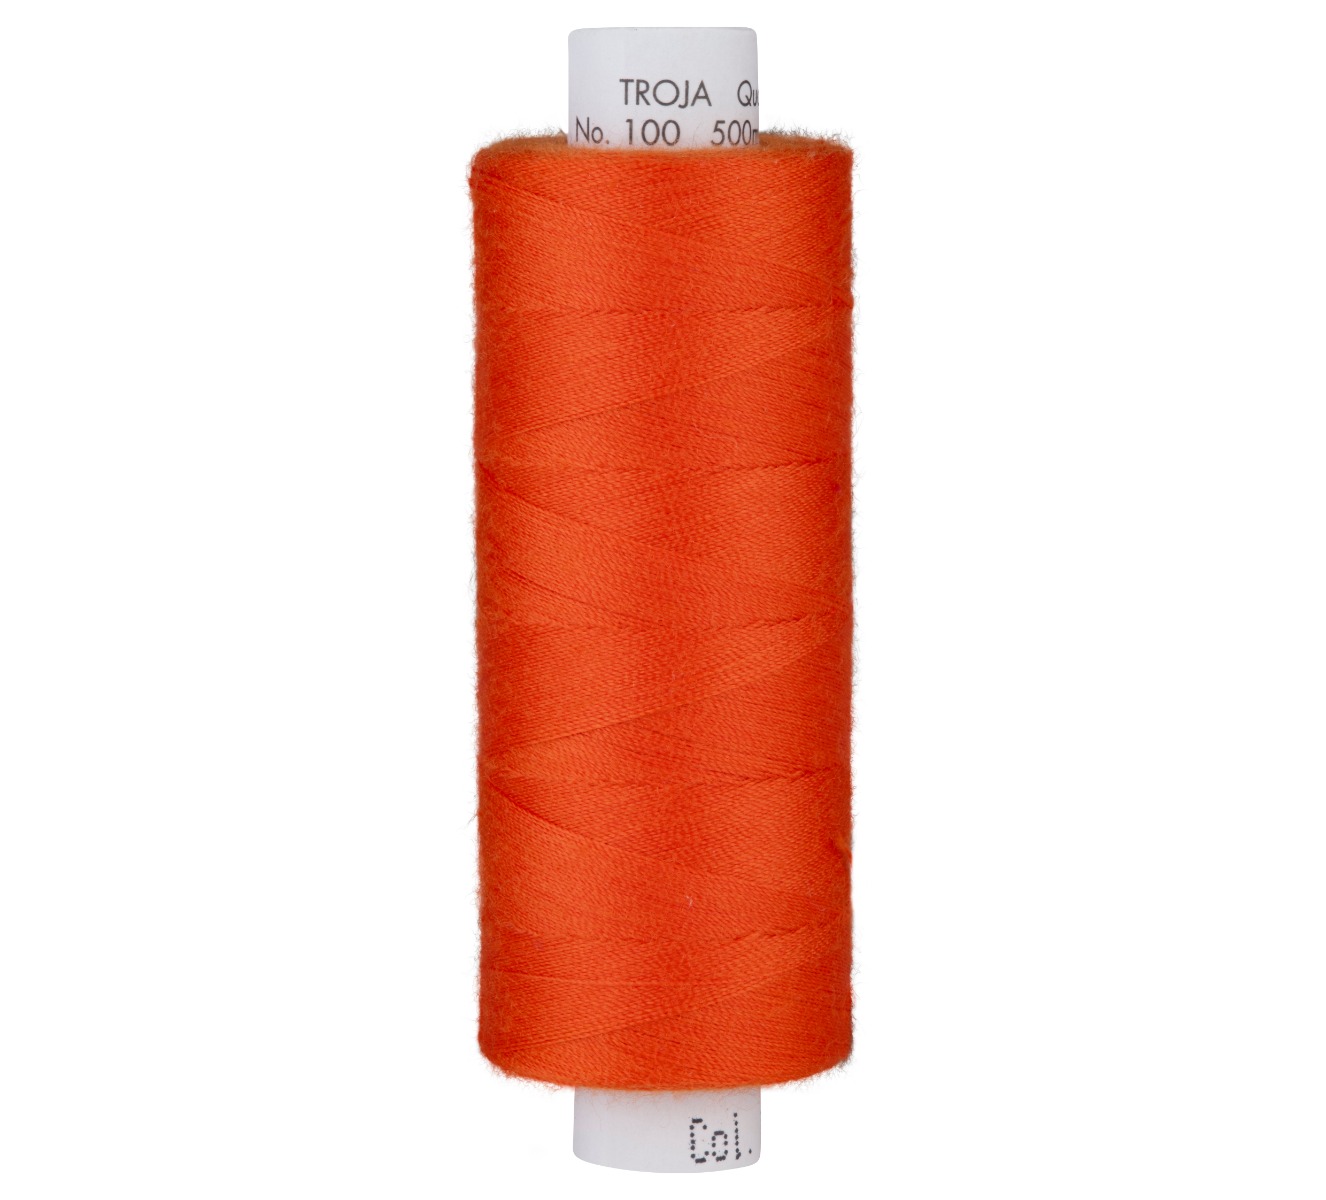 Troja Qualitätsnähgarn 500 m Orange Farbe 0450